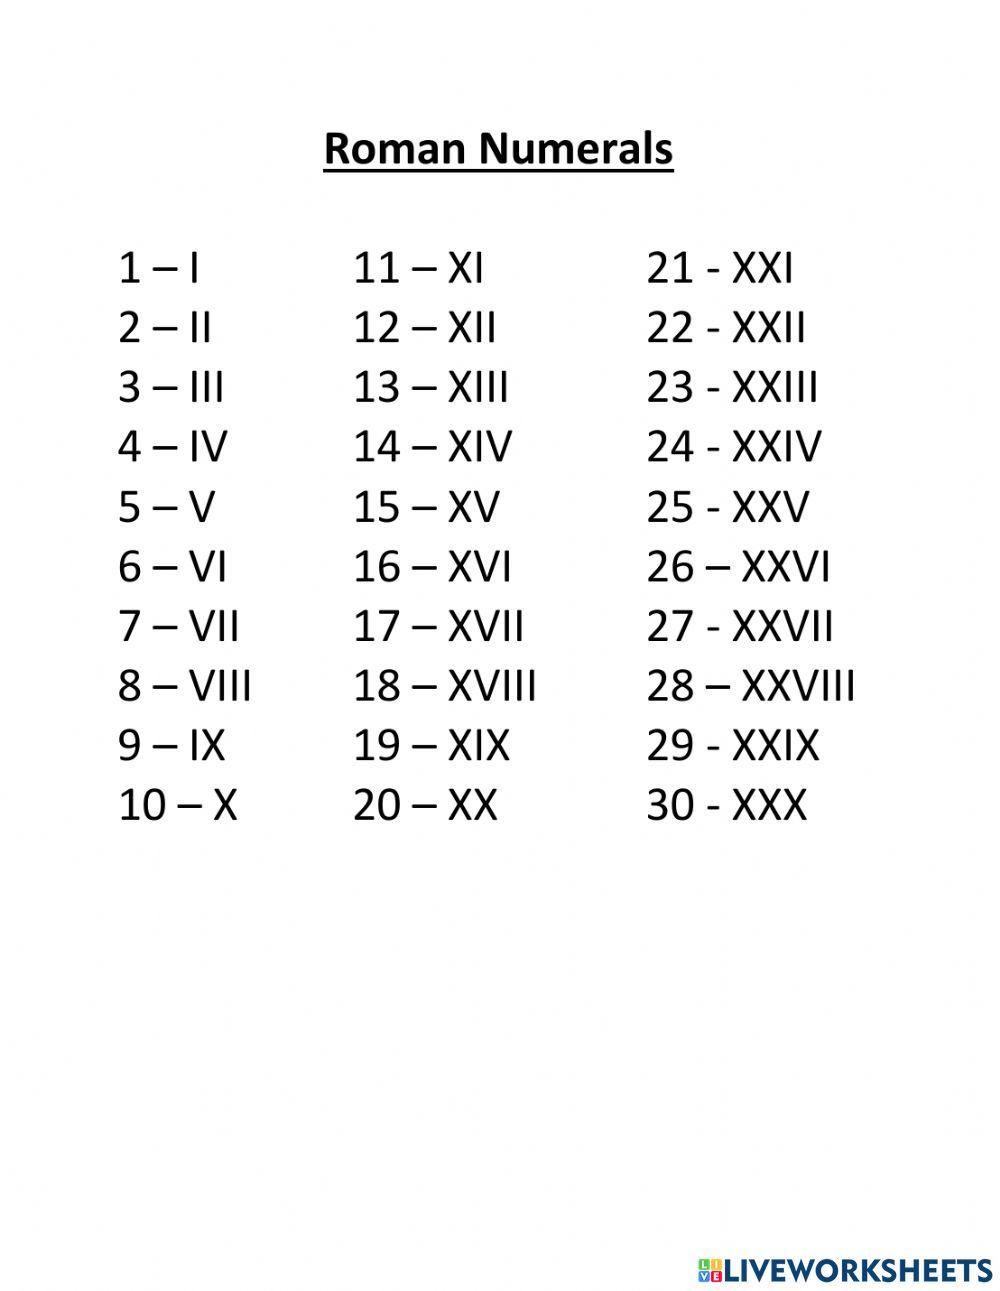 Roman Numerals 1-30 worksheet | Live Worksheets